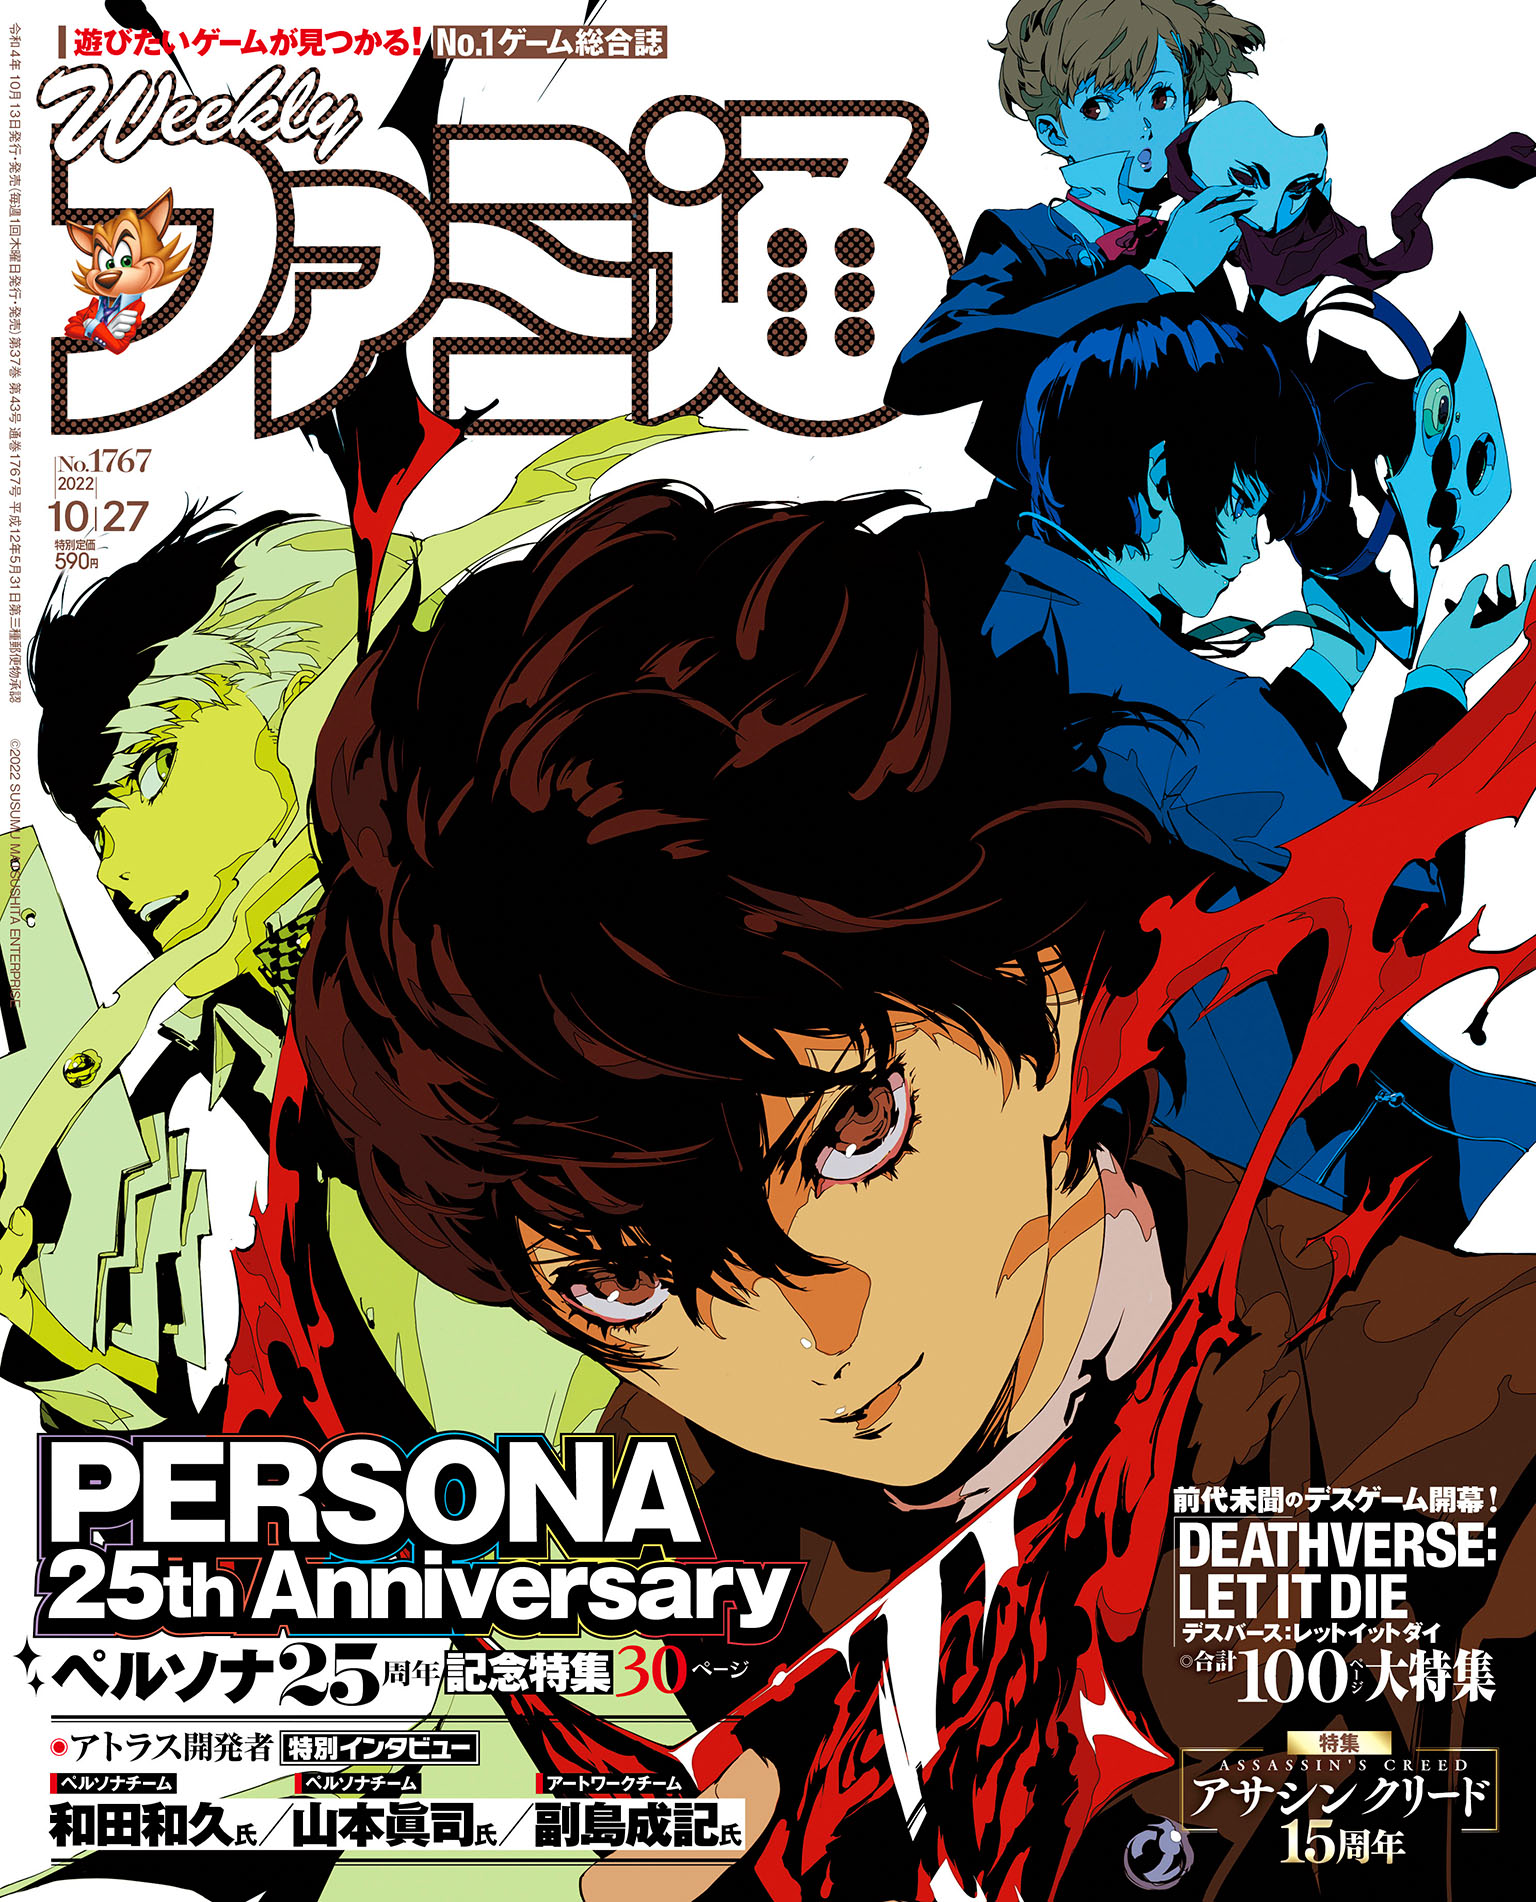 Famitsu cover art by Persona artist Shigenori Soejima